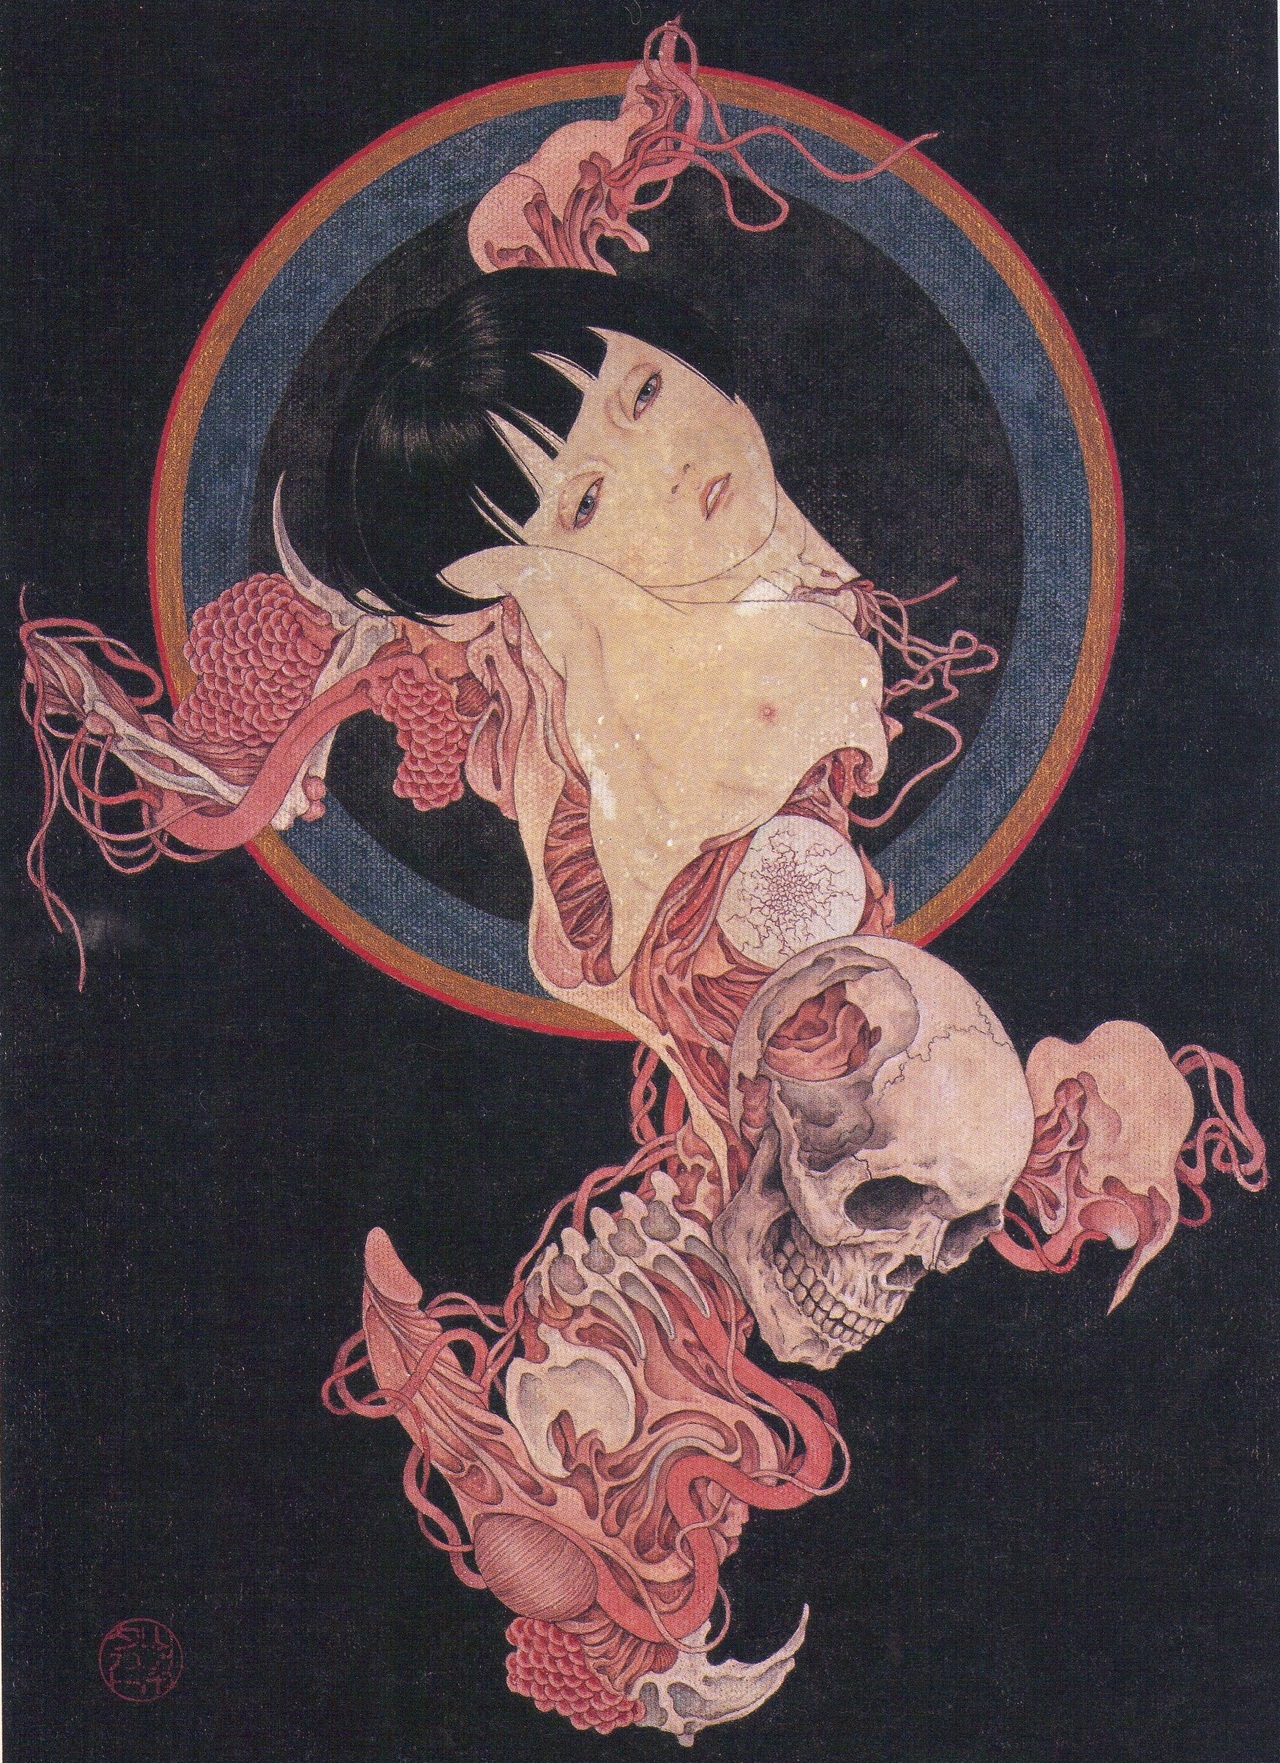 takato-yamamoto-ilustração-sexo-erotismo-sadomasoquismo-bondage-dionisio-arte-16